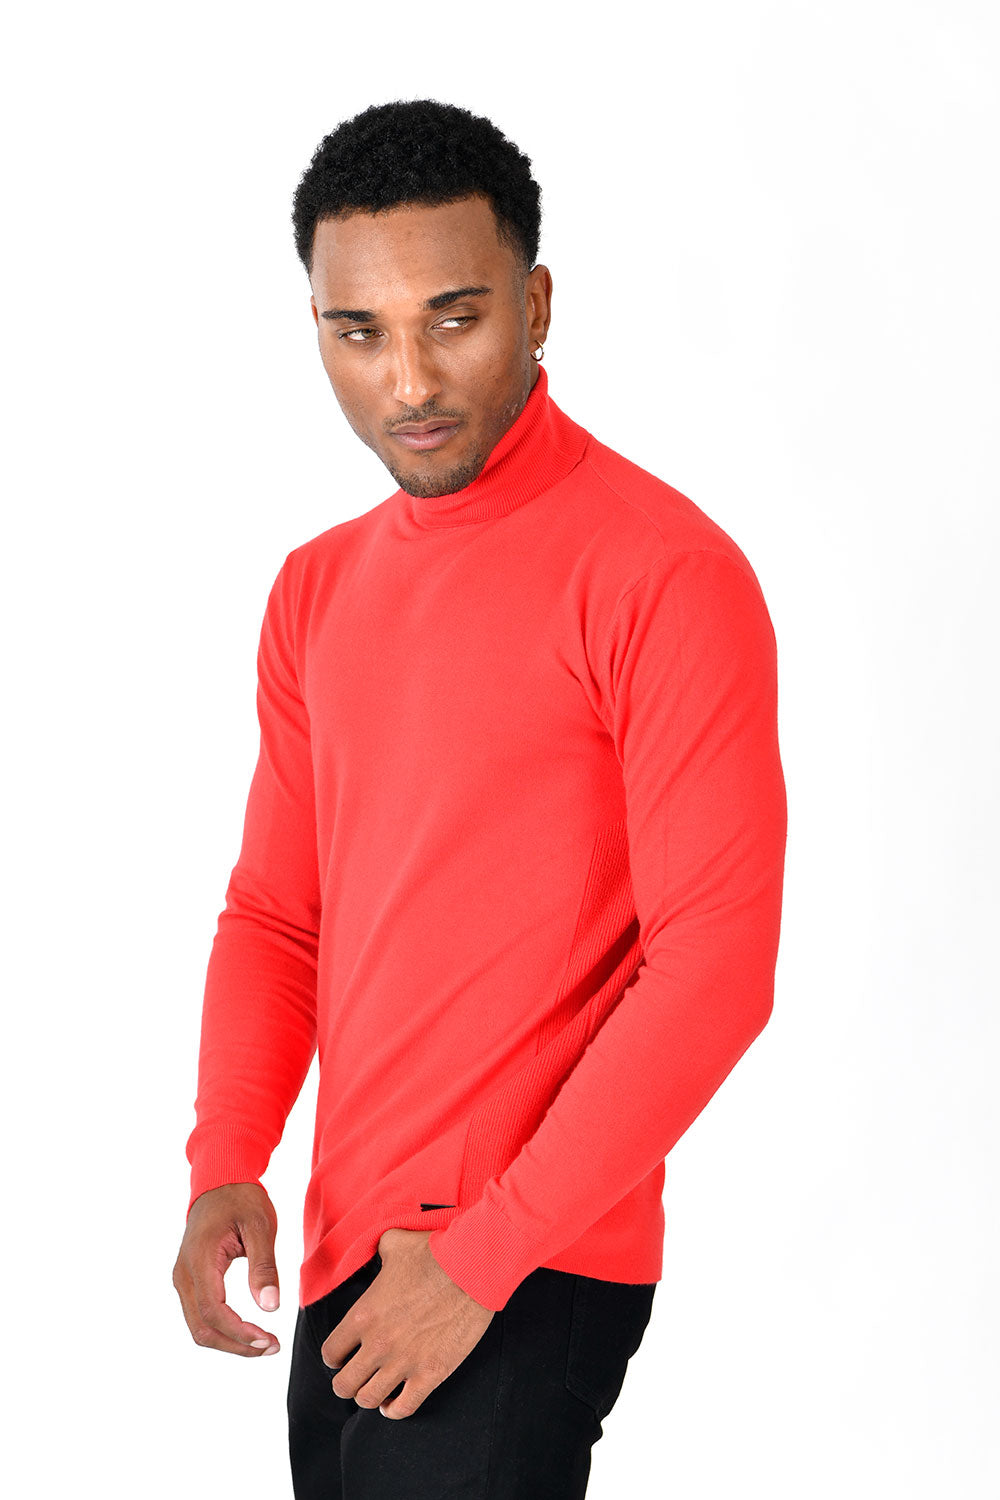 Men's Turtleneck Ribbed Solid Color Basic Sweater LS2100 Red